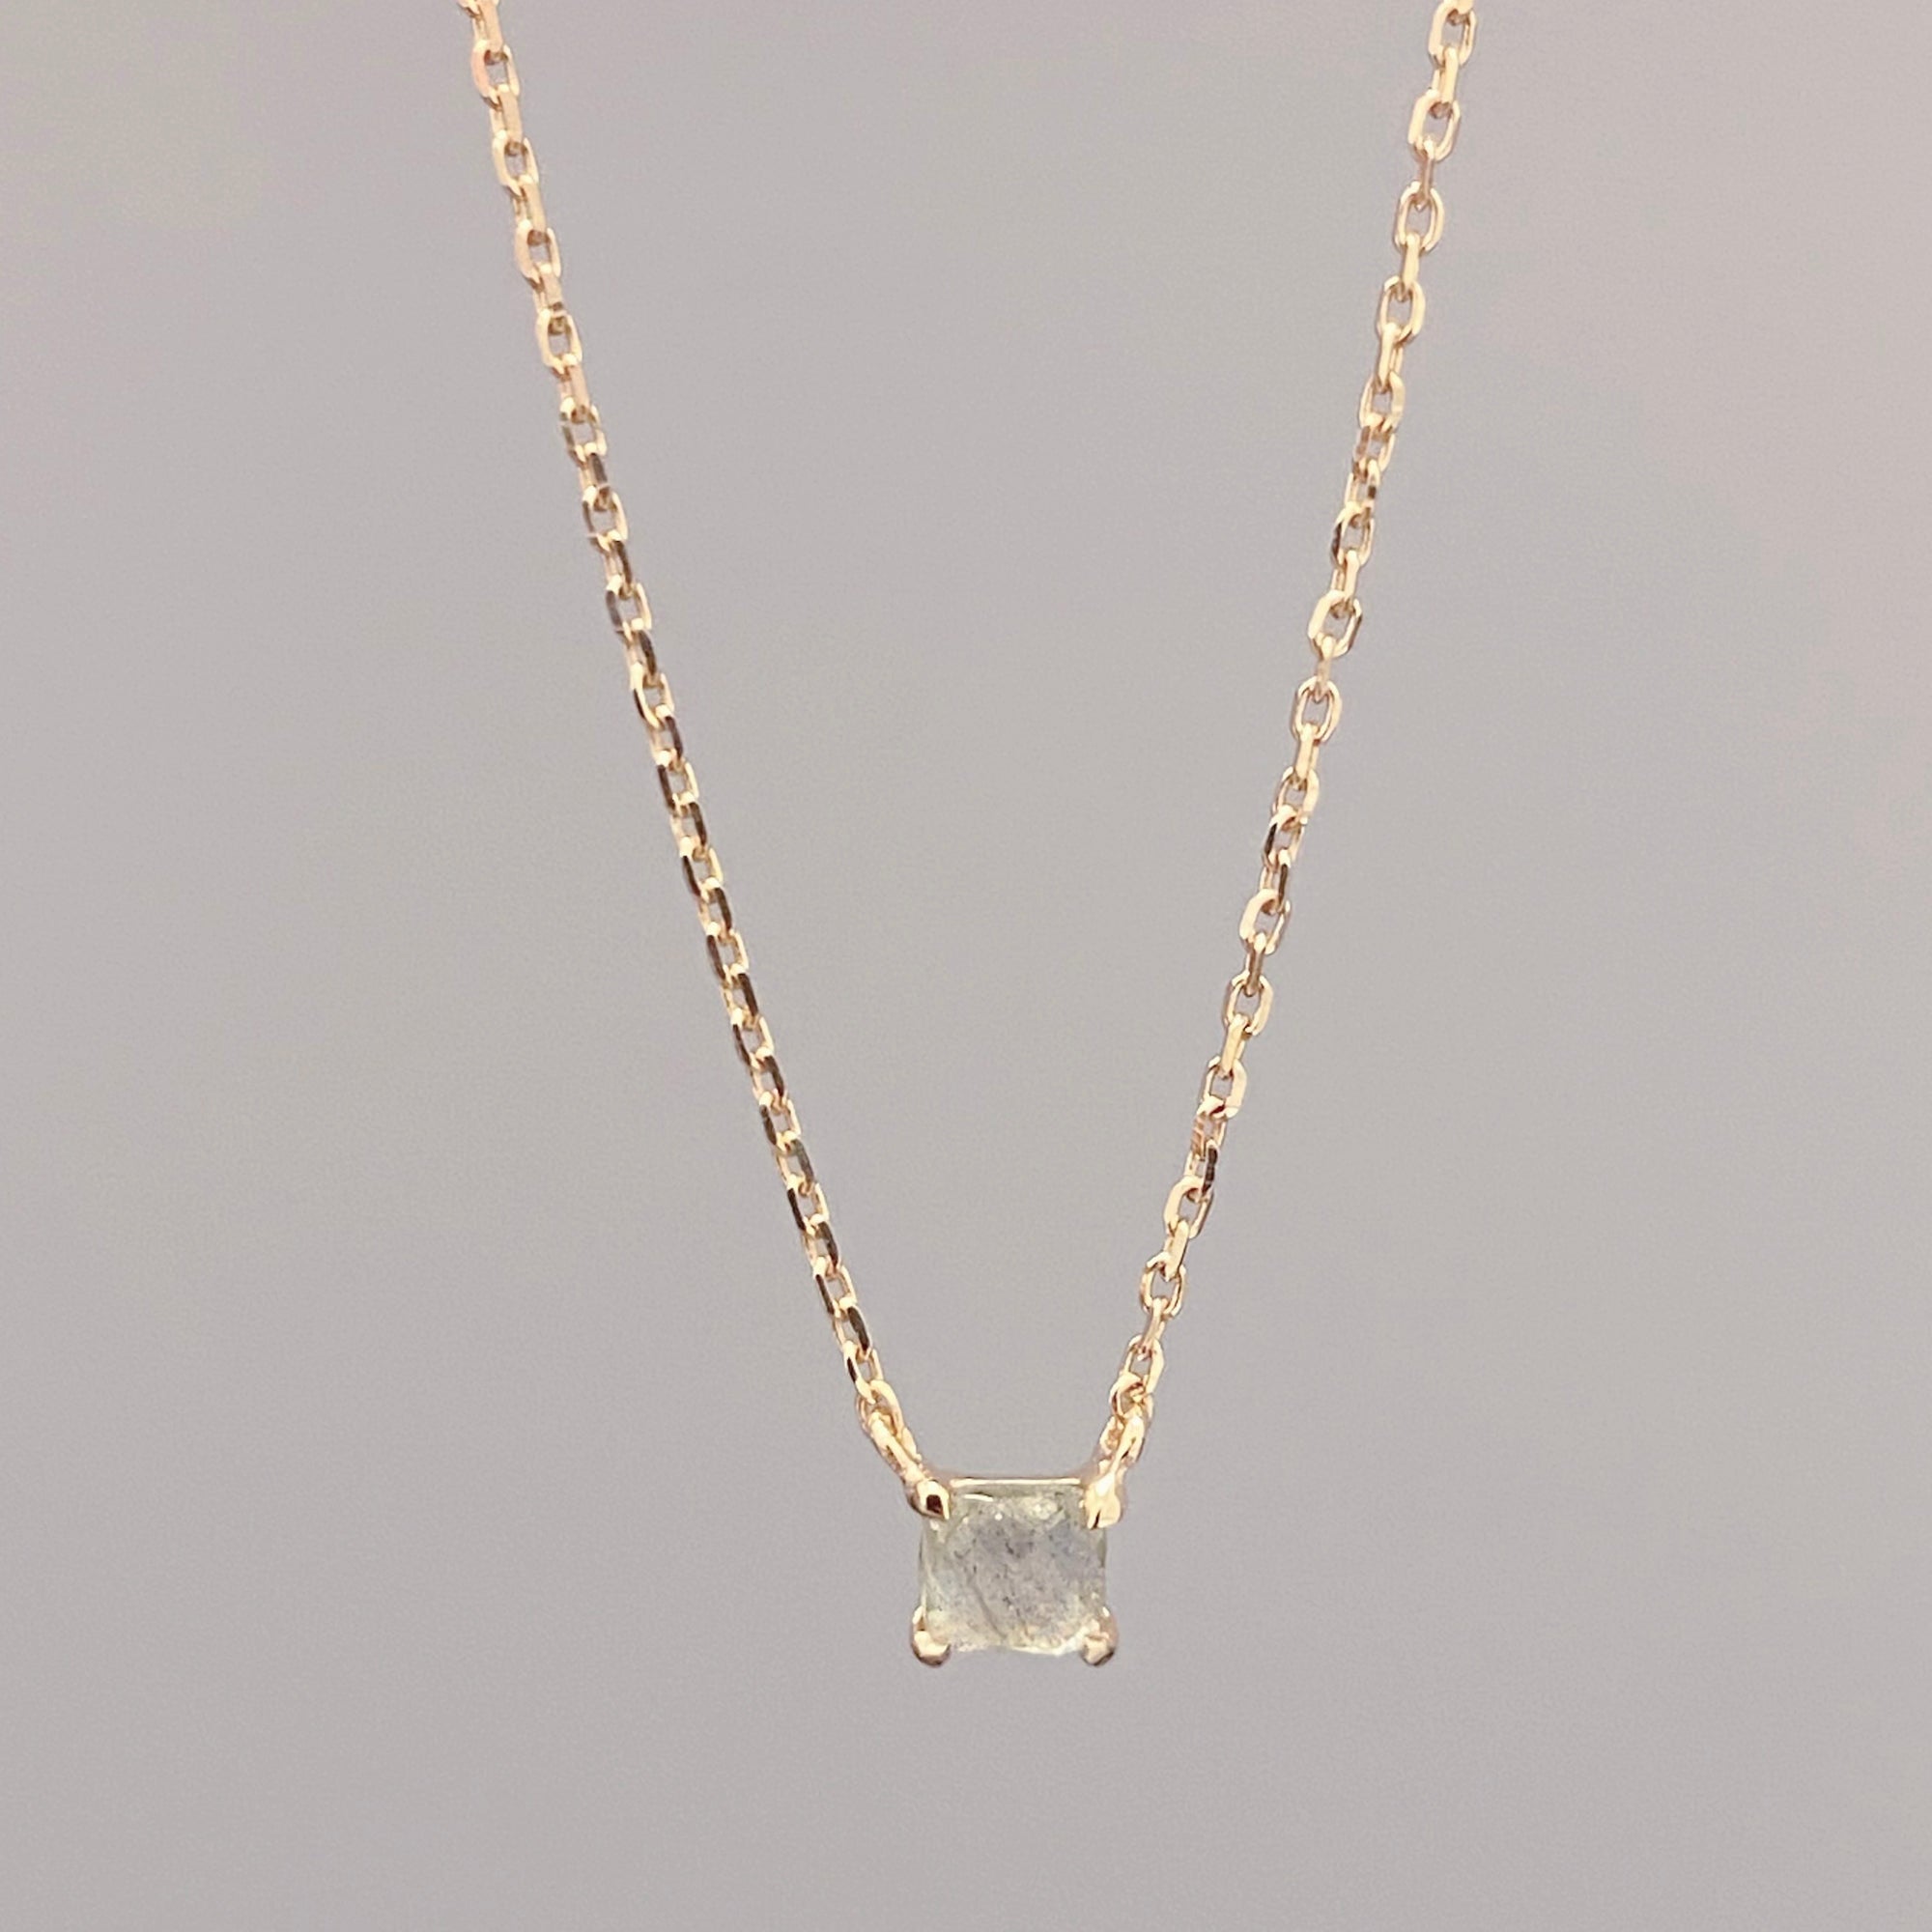 Square Shaped Labradorite Necklace